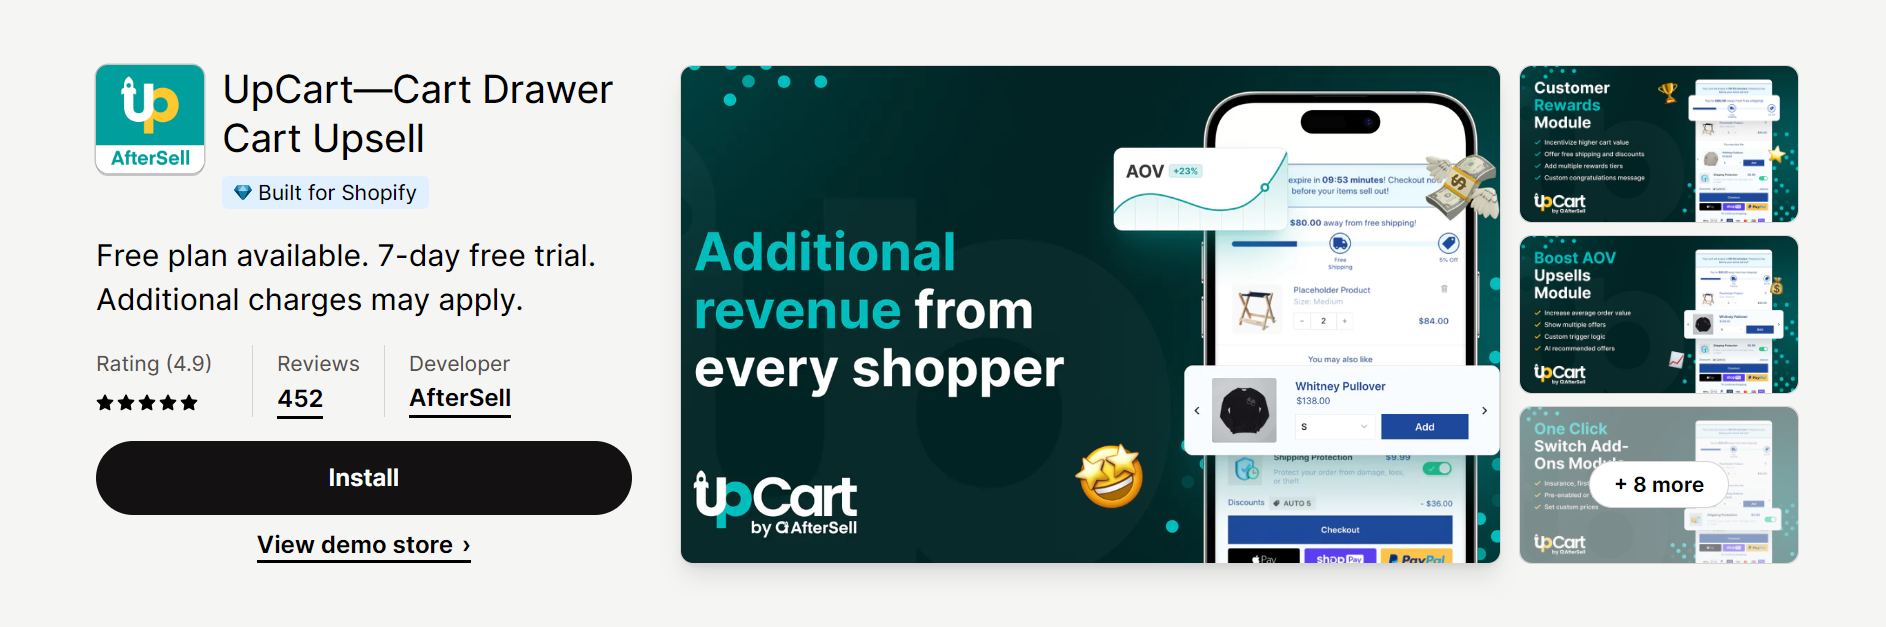 UpCart—Cart Drawer Cart Upsell